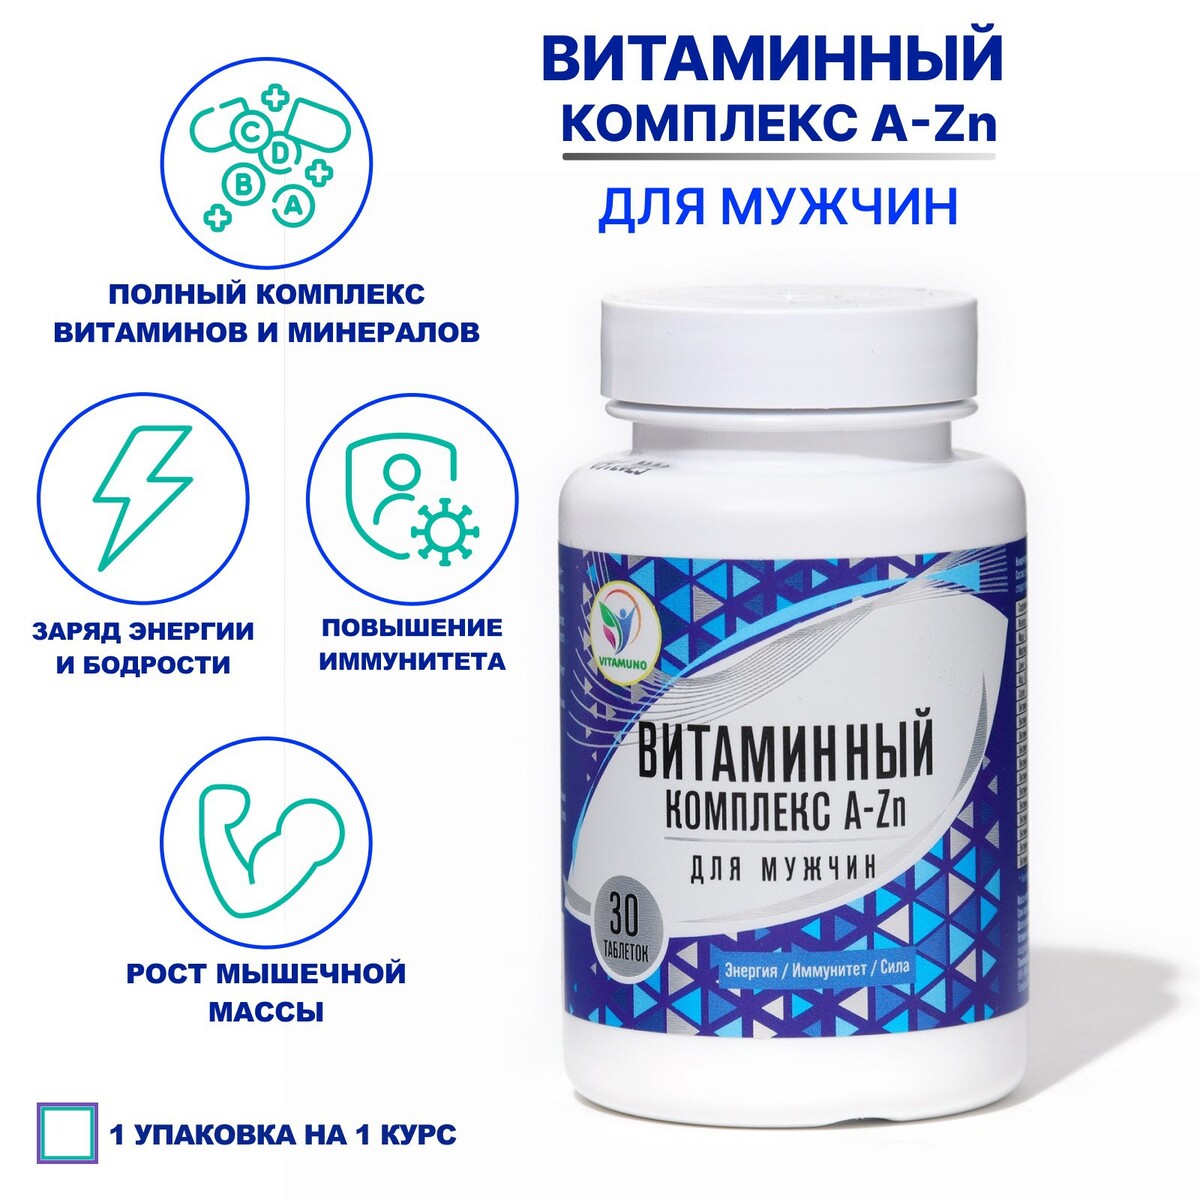 Витаминный комплекс a-zn для мужчин vitamuno, 30 таблеток магний в6 форте 120 таблеток по 700 мг